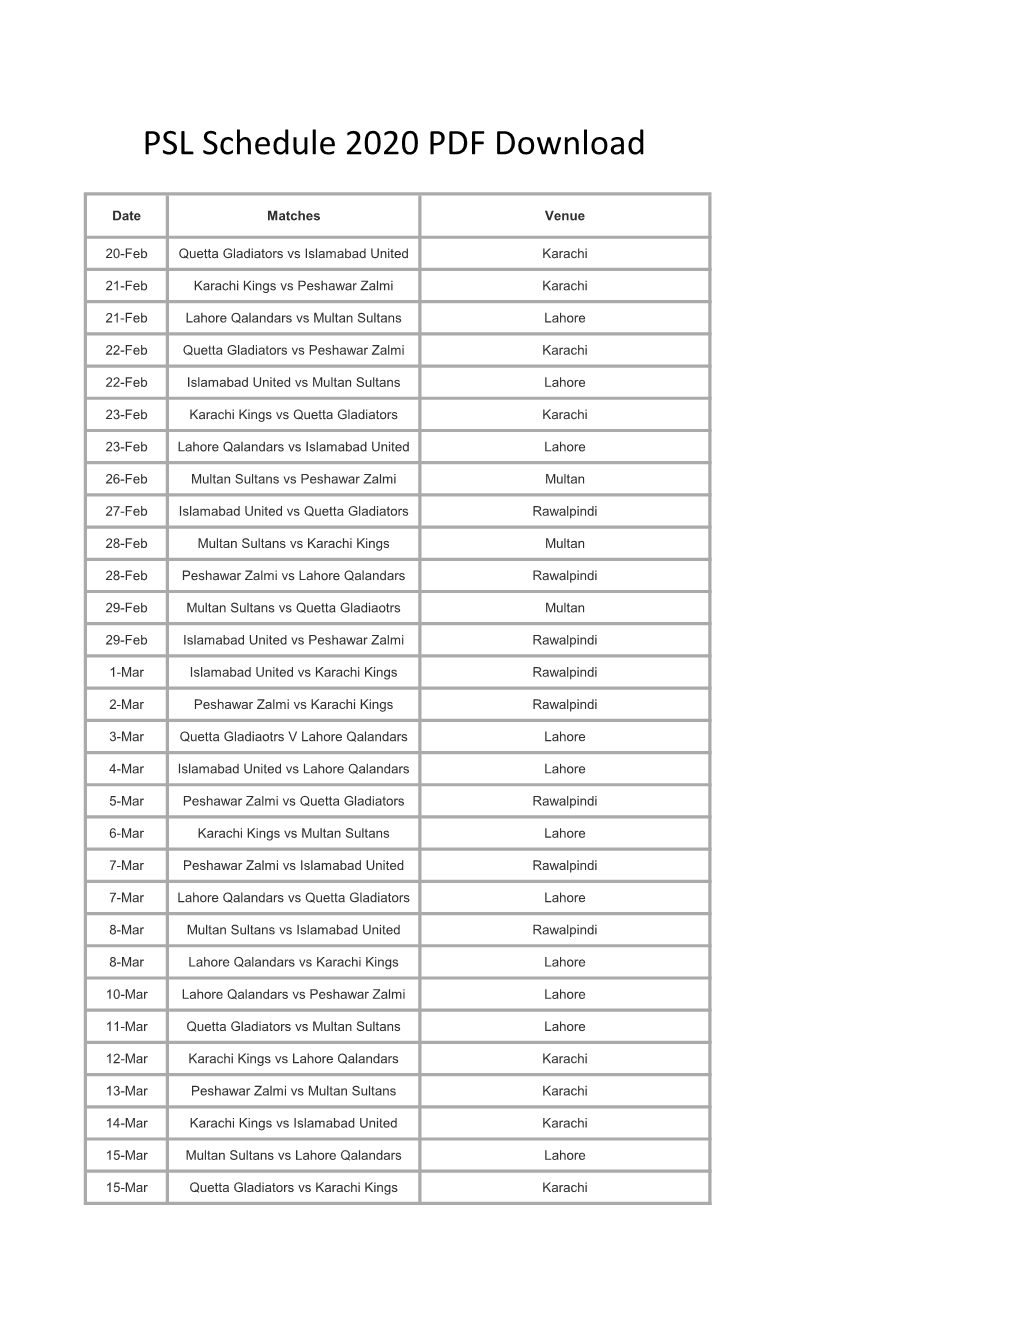 PSL Schedule 2020 PDF Download